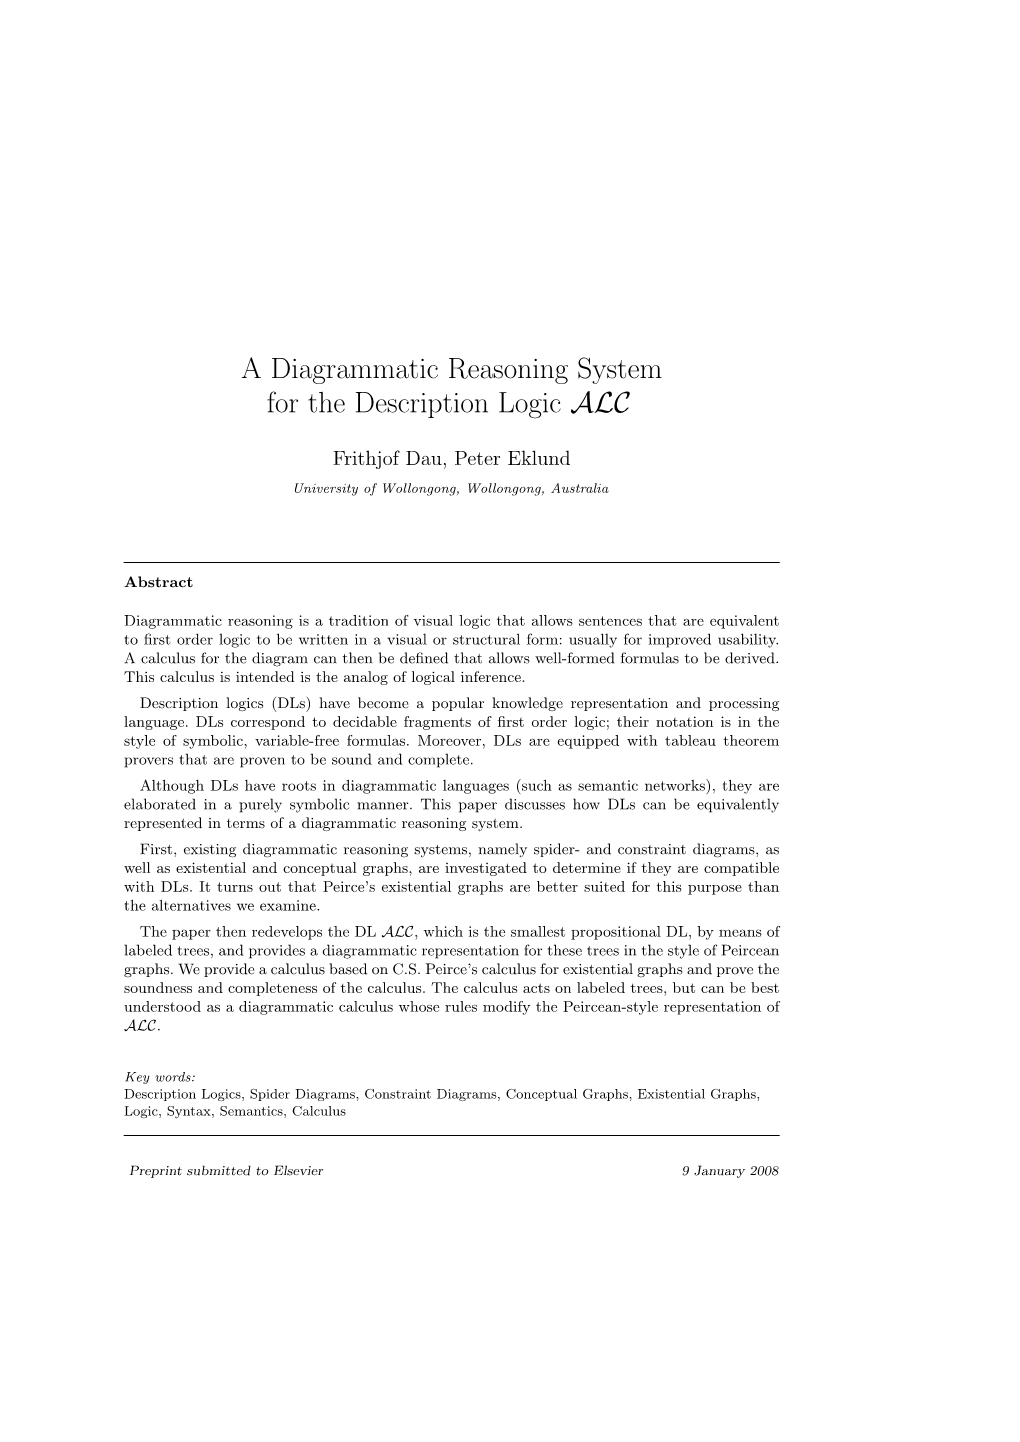 A Diagrammatic Reasoning System for the Description Logic ALC